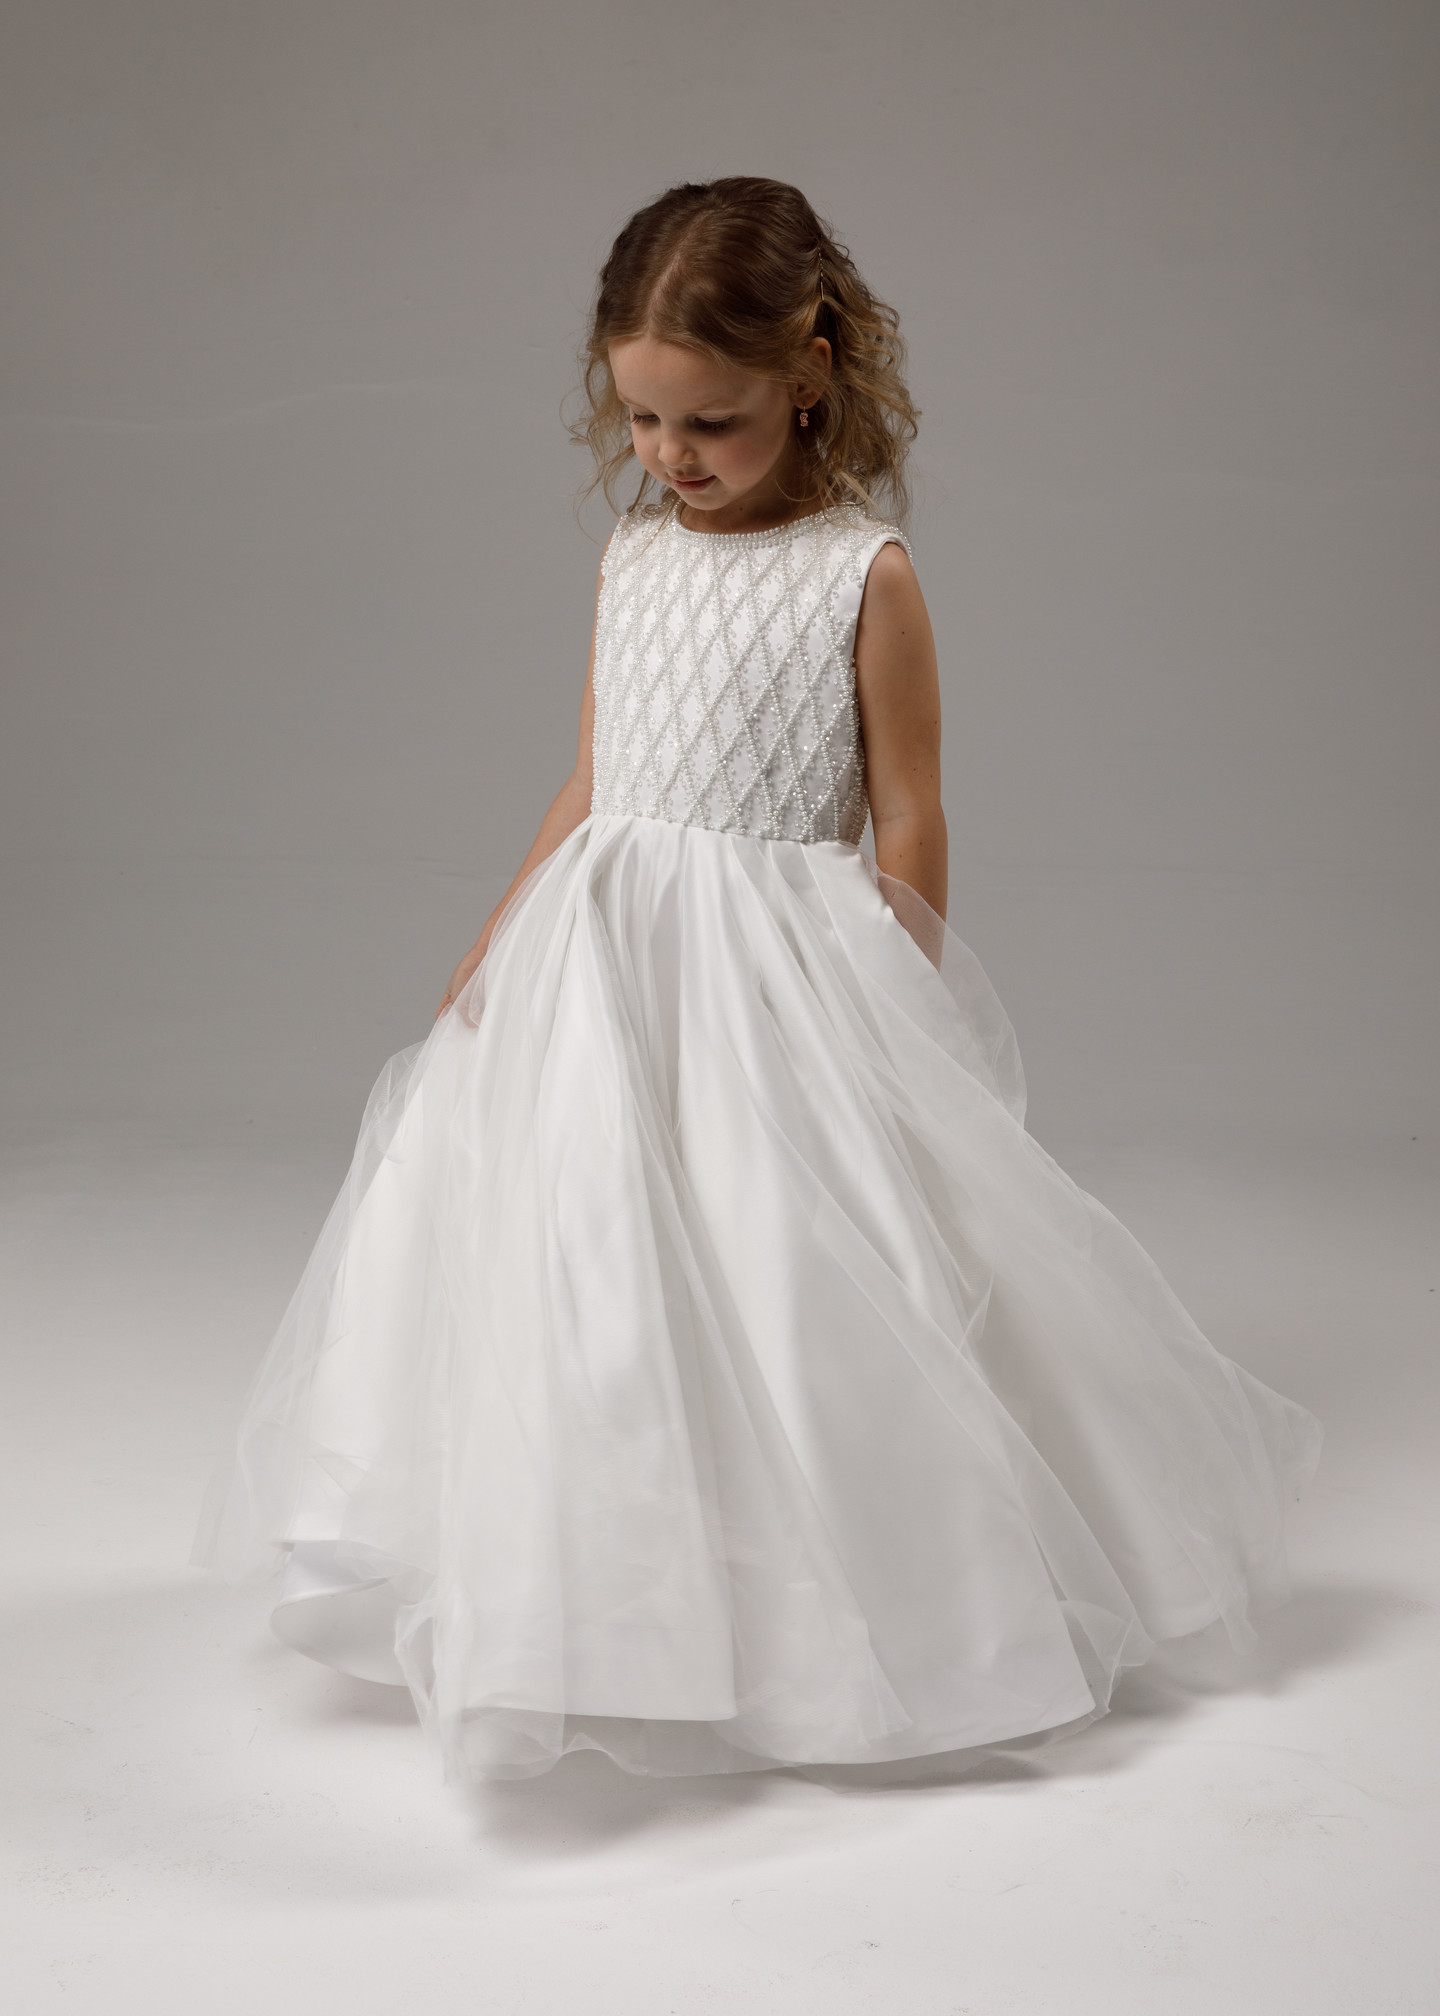 Beaded flower girl dress, 2021, couture, child dress, child, off-white, satin, embroidery, flower girl